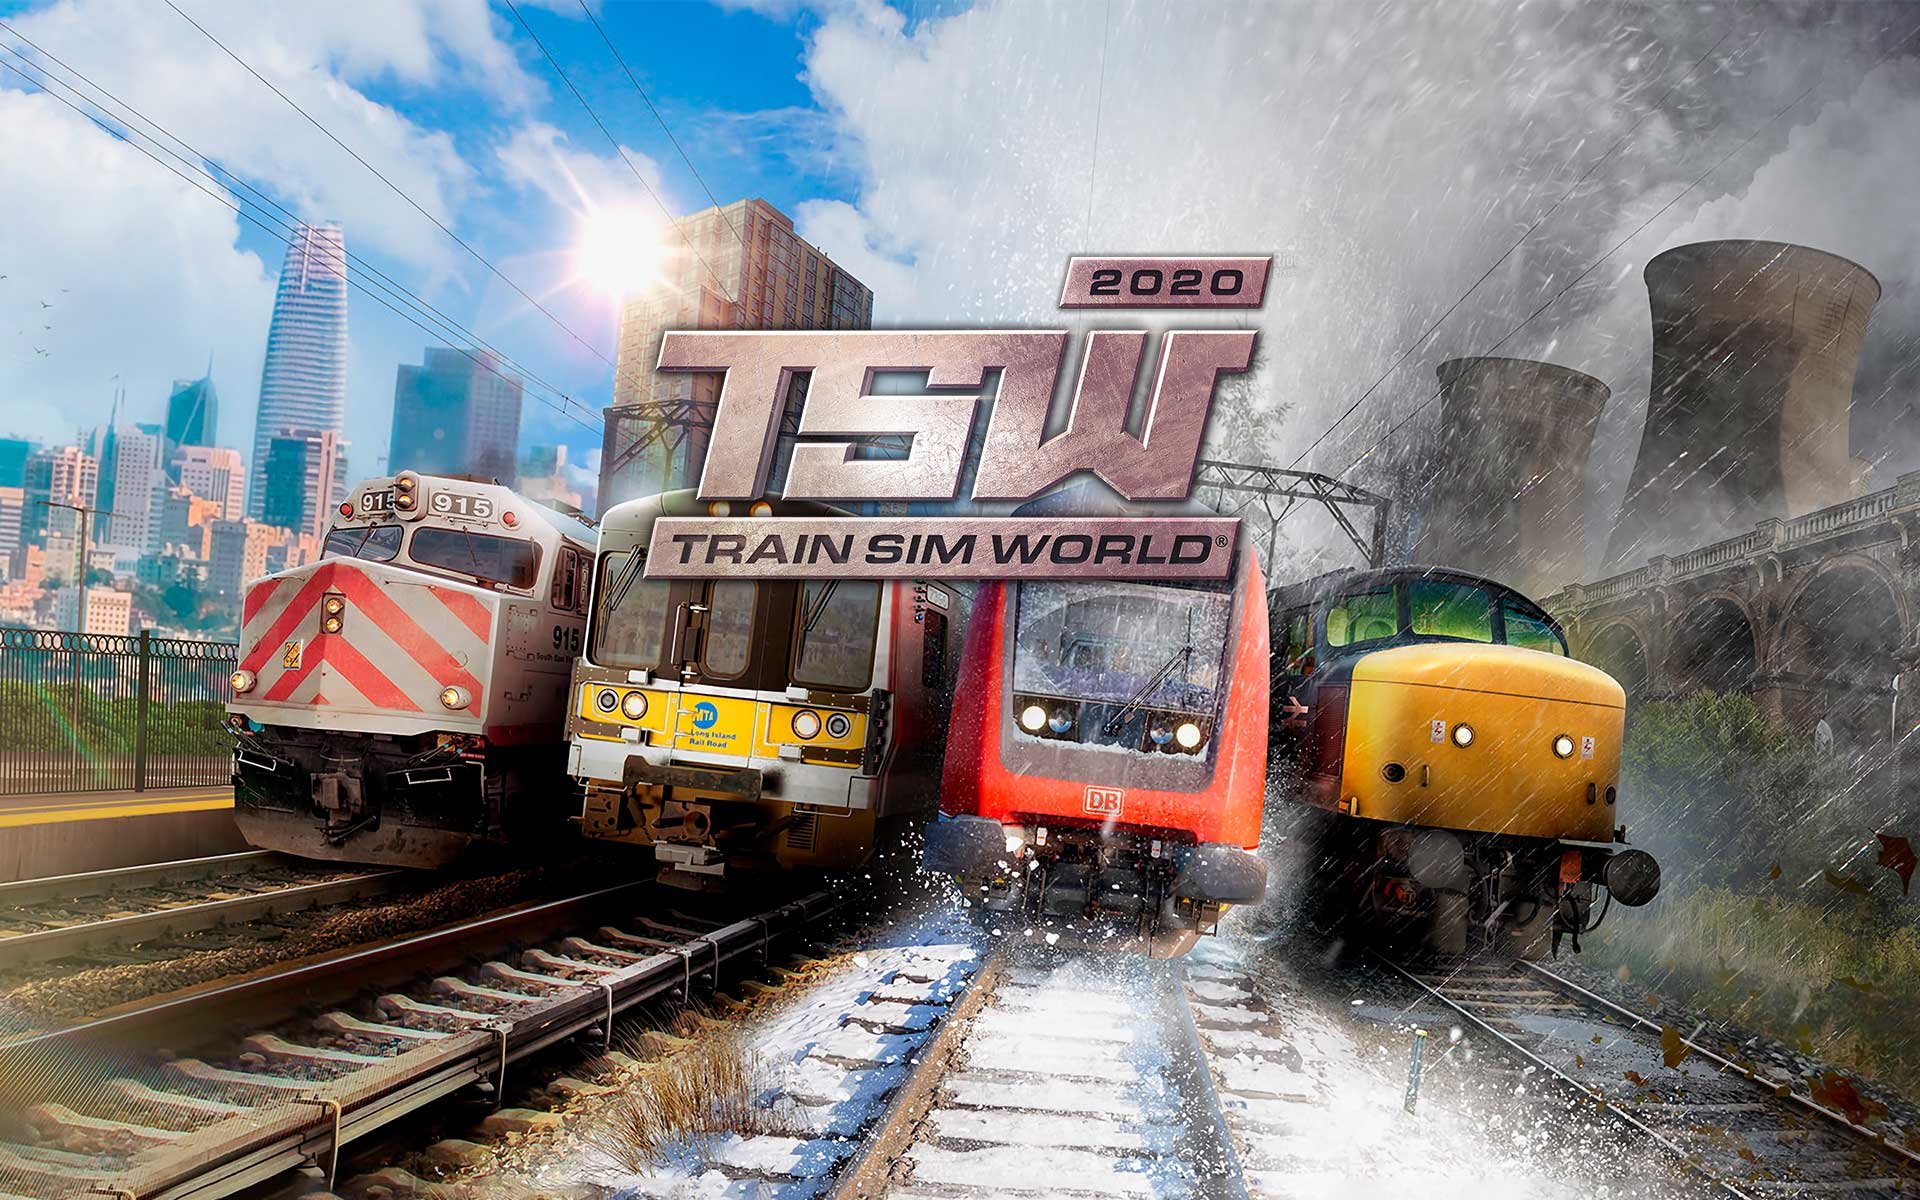 Train SIM World 2020 ps4. Train SIM World 1. Train SIM World Digital Deluxe Edition. Train SIM World 4. Чит железная дорога